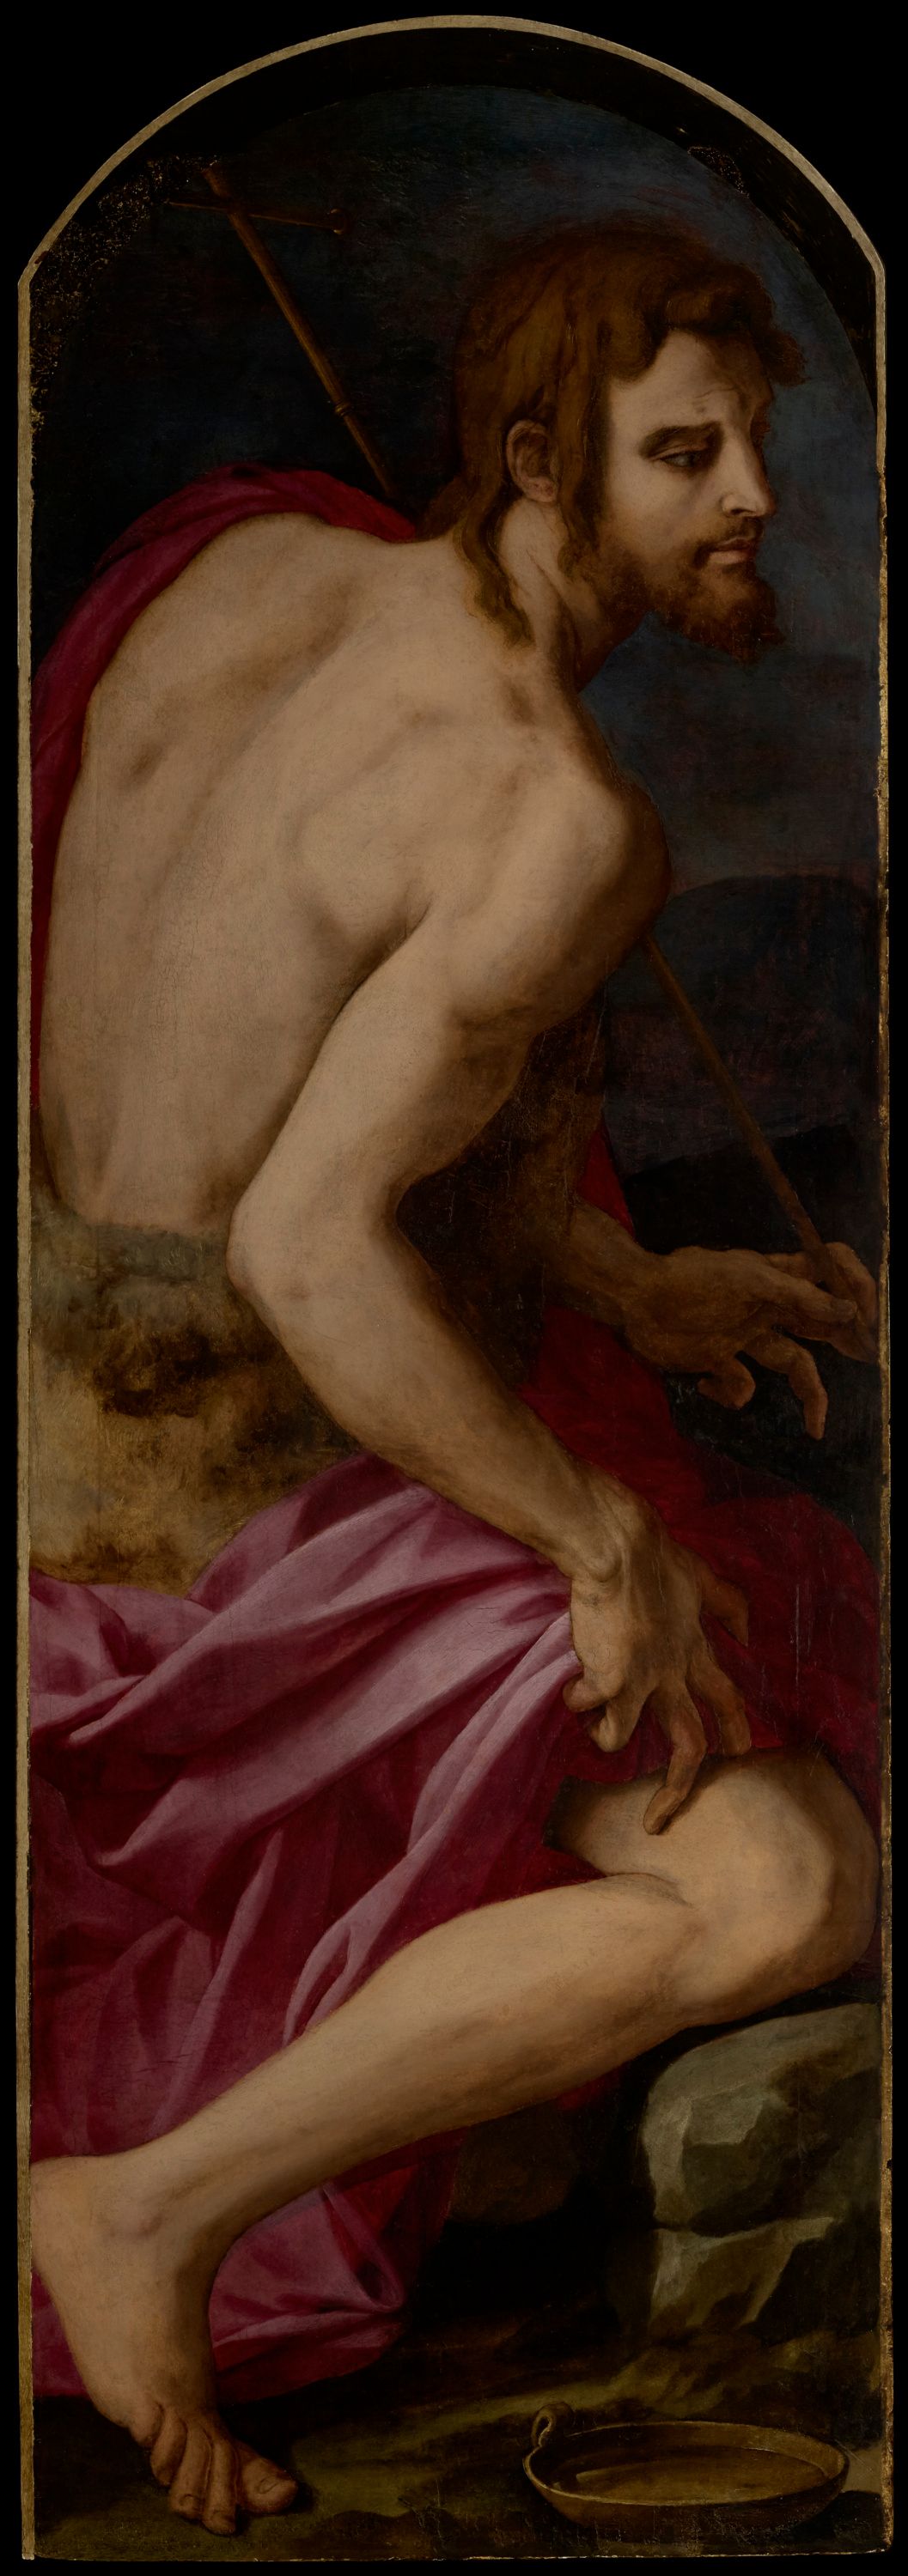 Saint John the Baptist by Agnolo Bronzino (1542-1545) - Public Domain Bible Painting